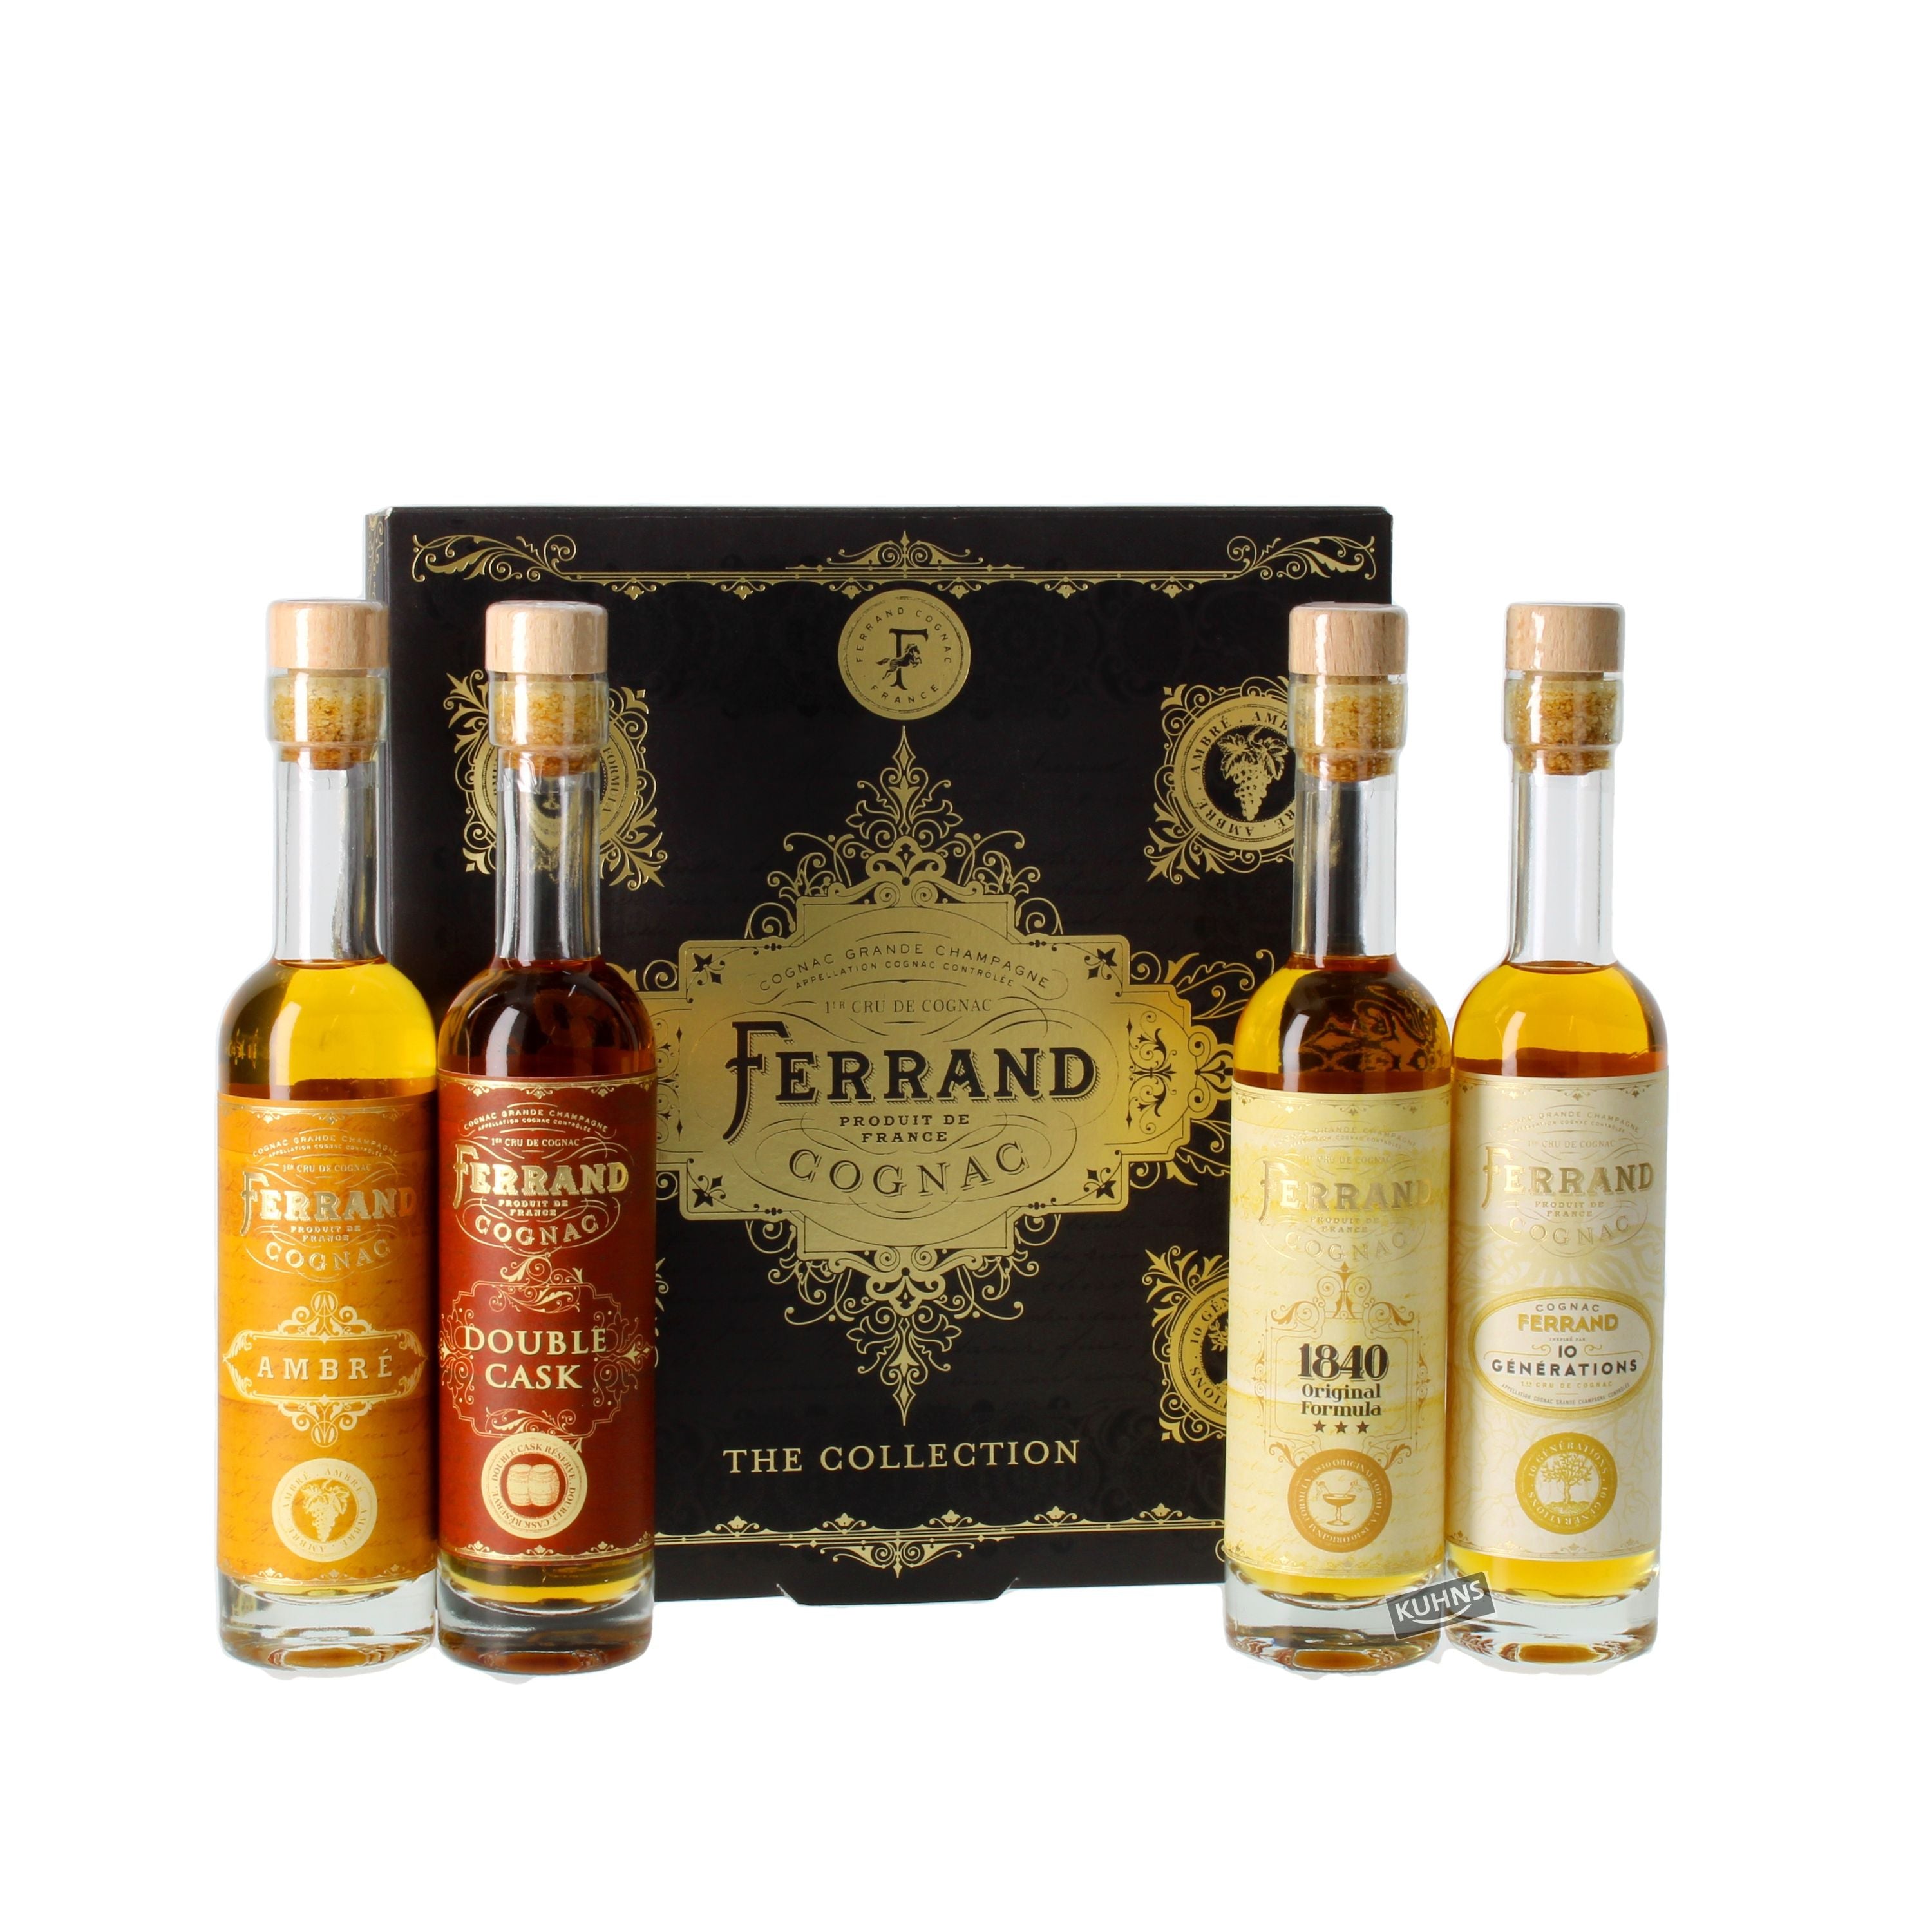 Pierre Ferrand Cognac Collection Box 0,4l, alk. 43,33 tilavuusprosenttia, Cognac France